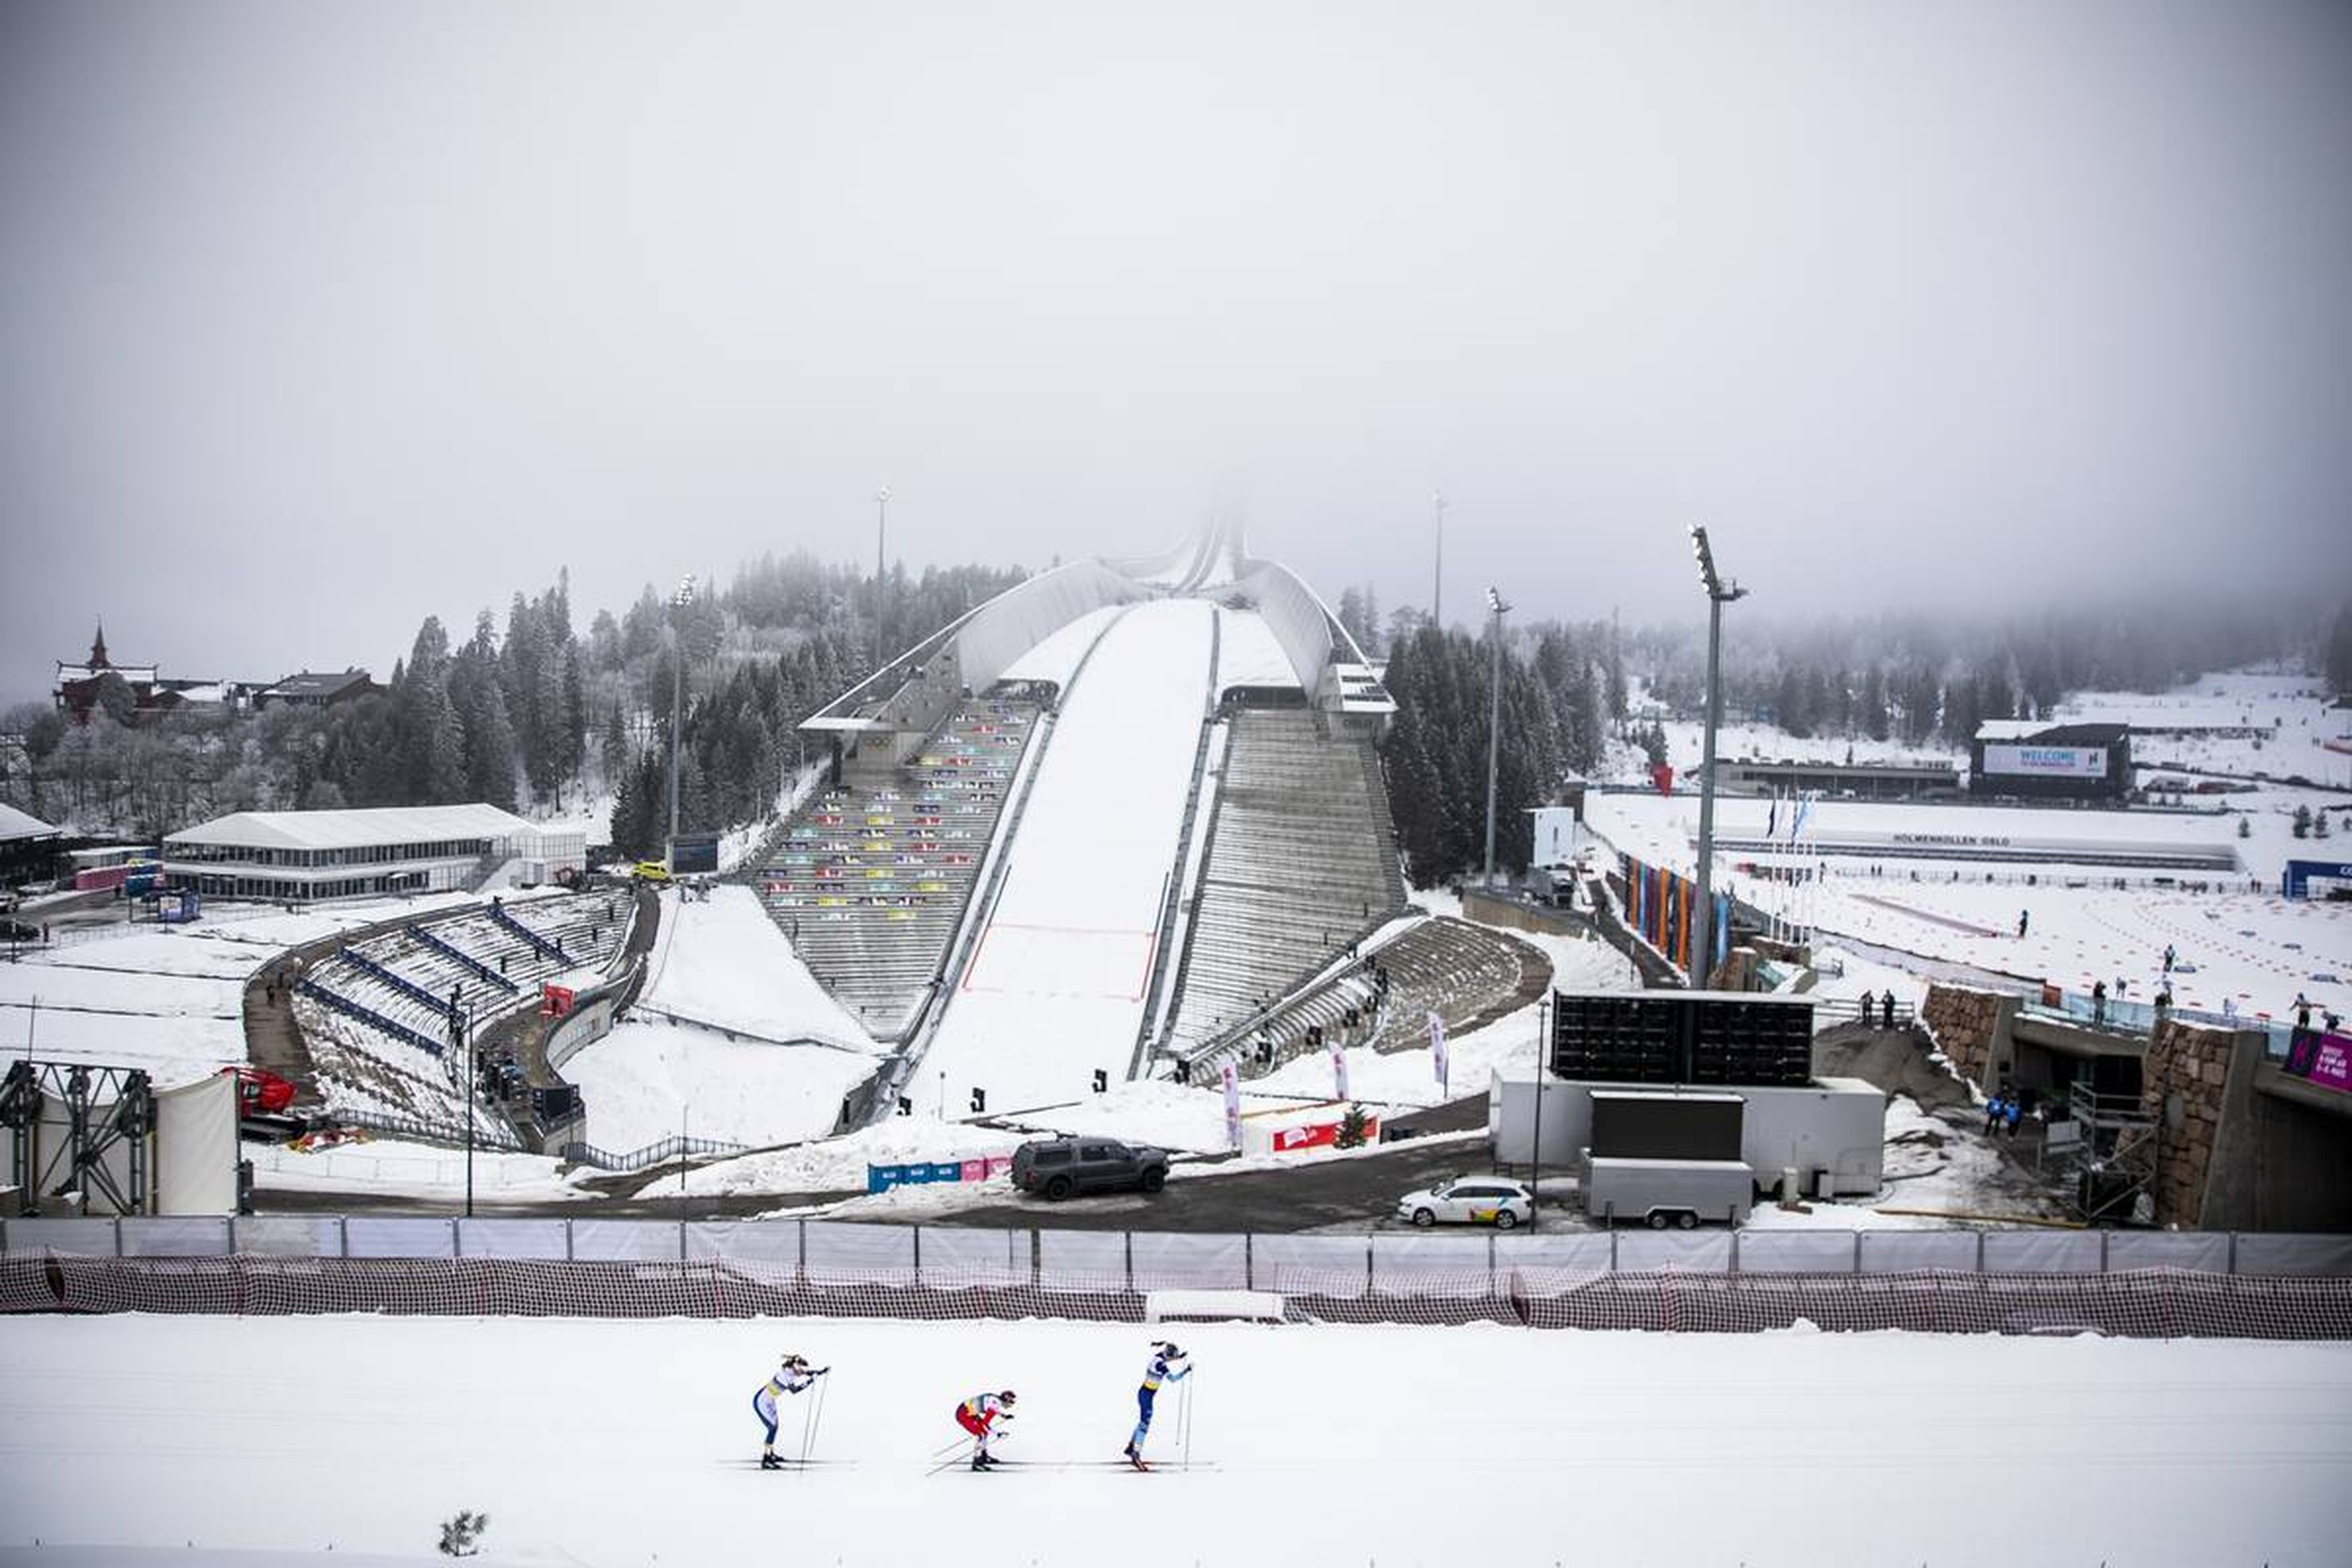 A memorable final race of the season 2020 - Holmenkollen with empty stands